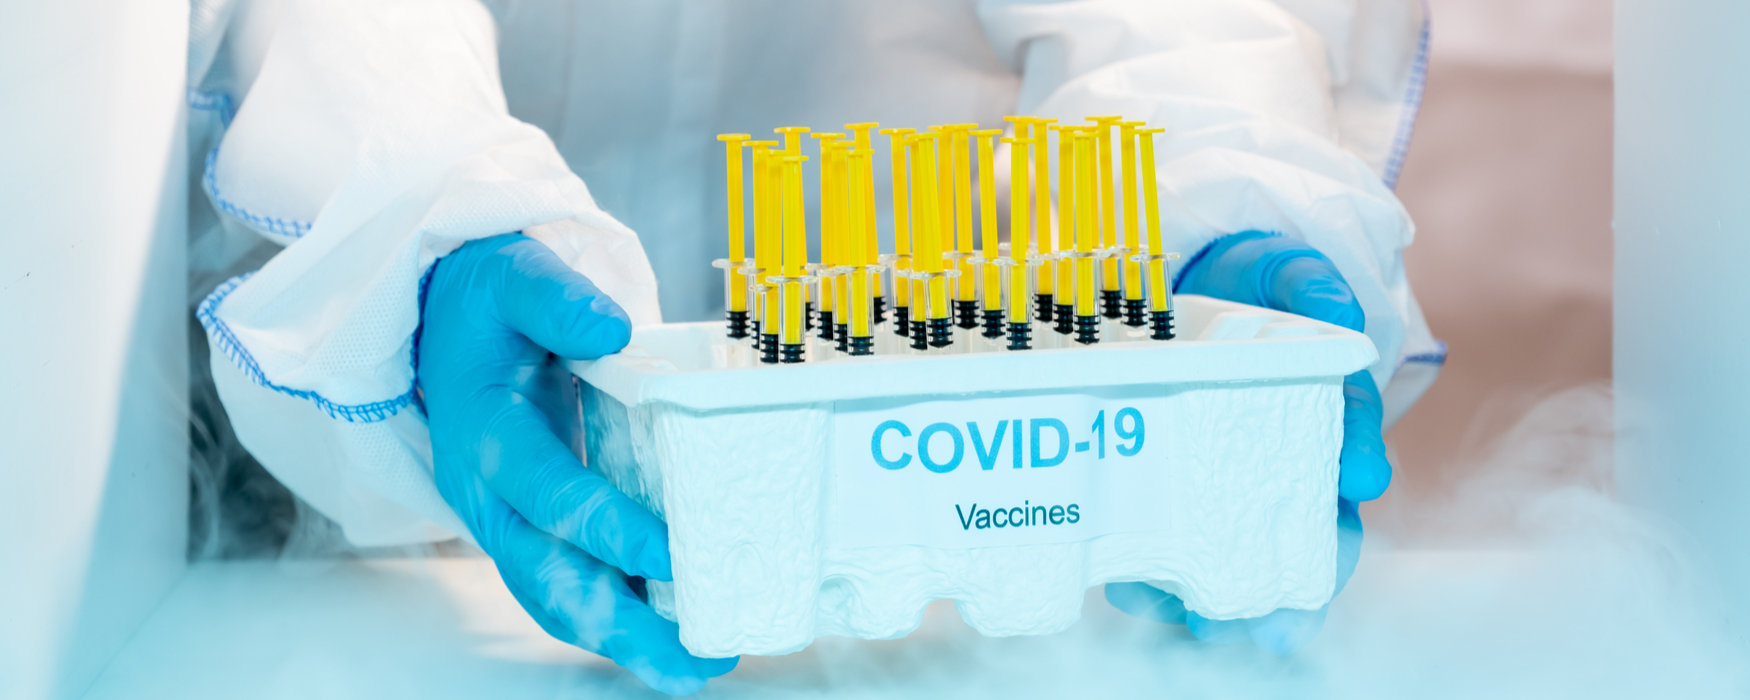 Colorado covid vaccine freezers - covid 19 vaccine freezer - vaccine storage in Colorado